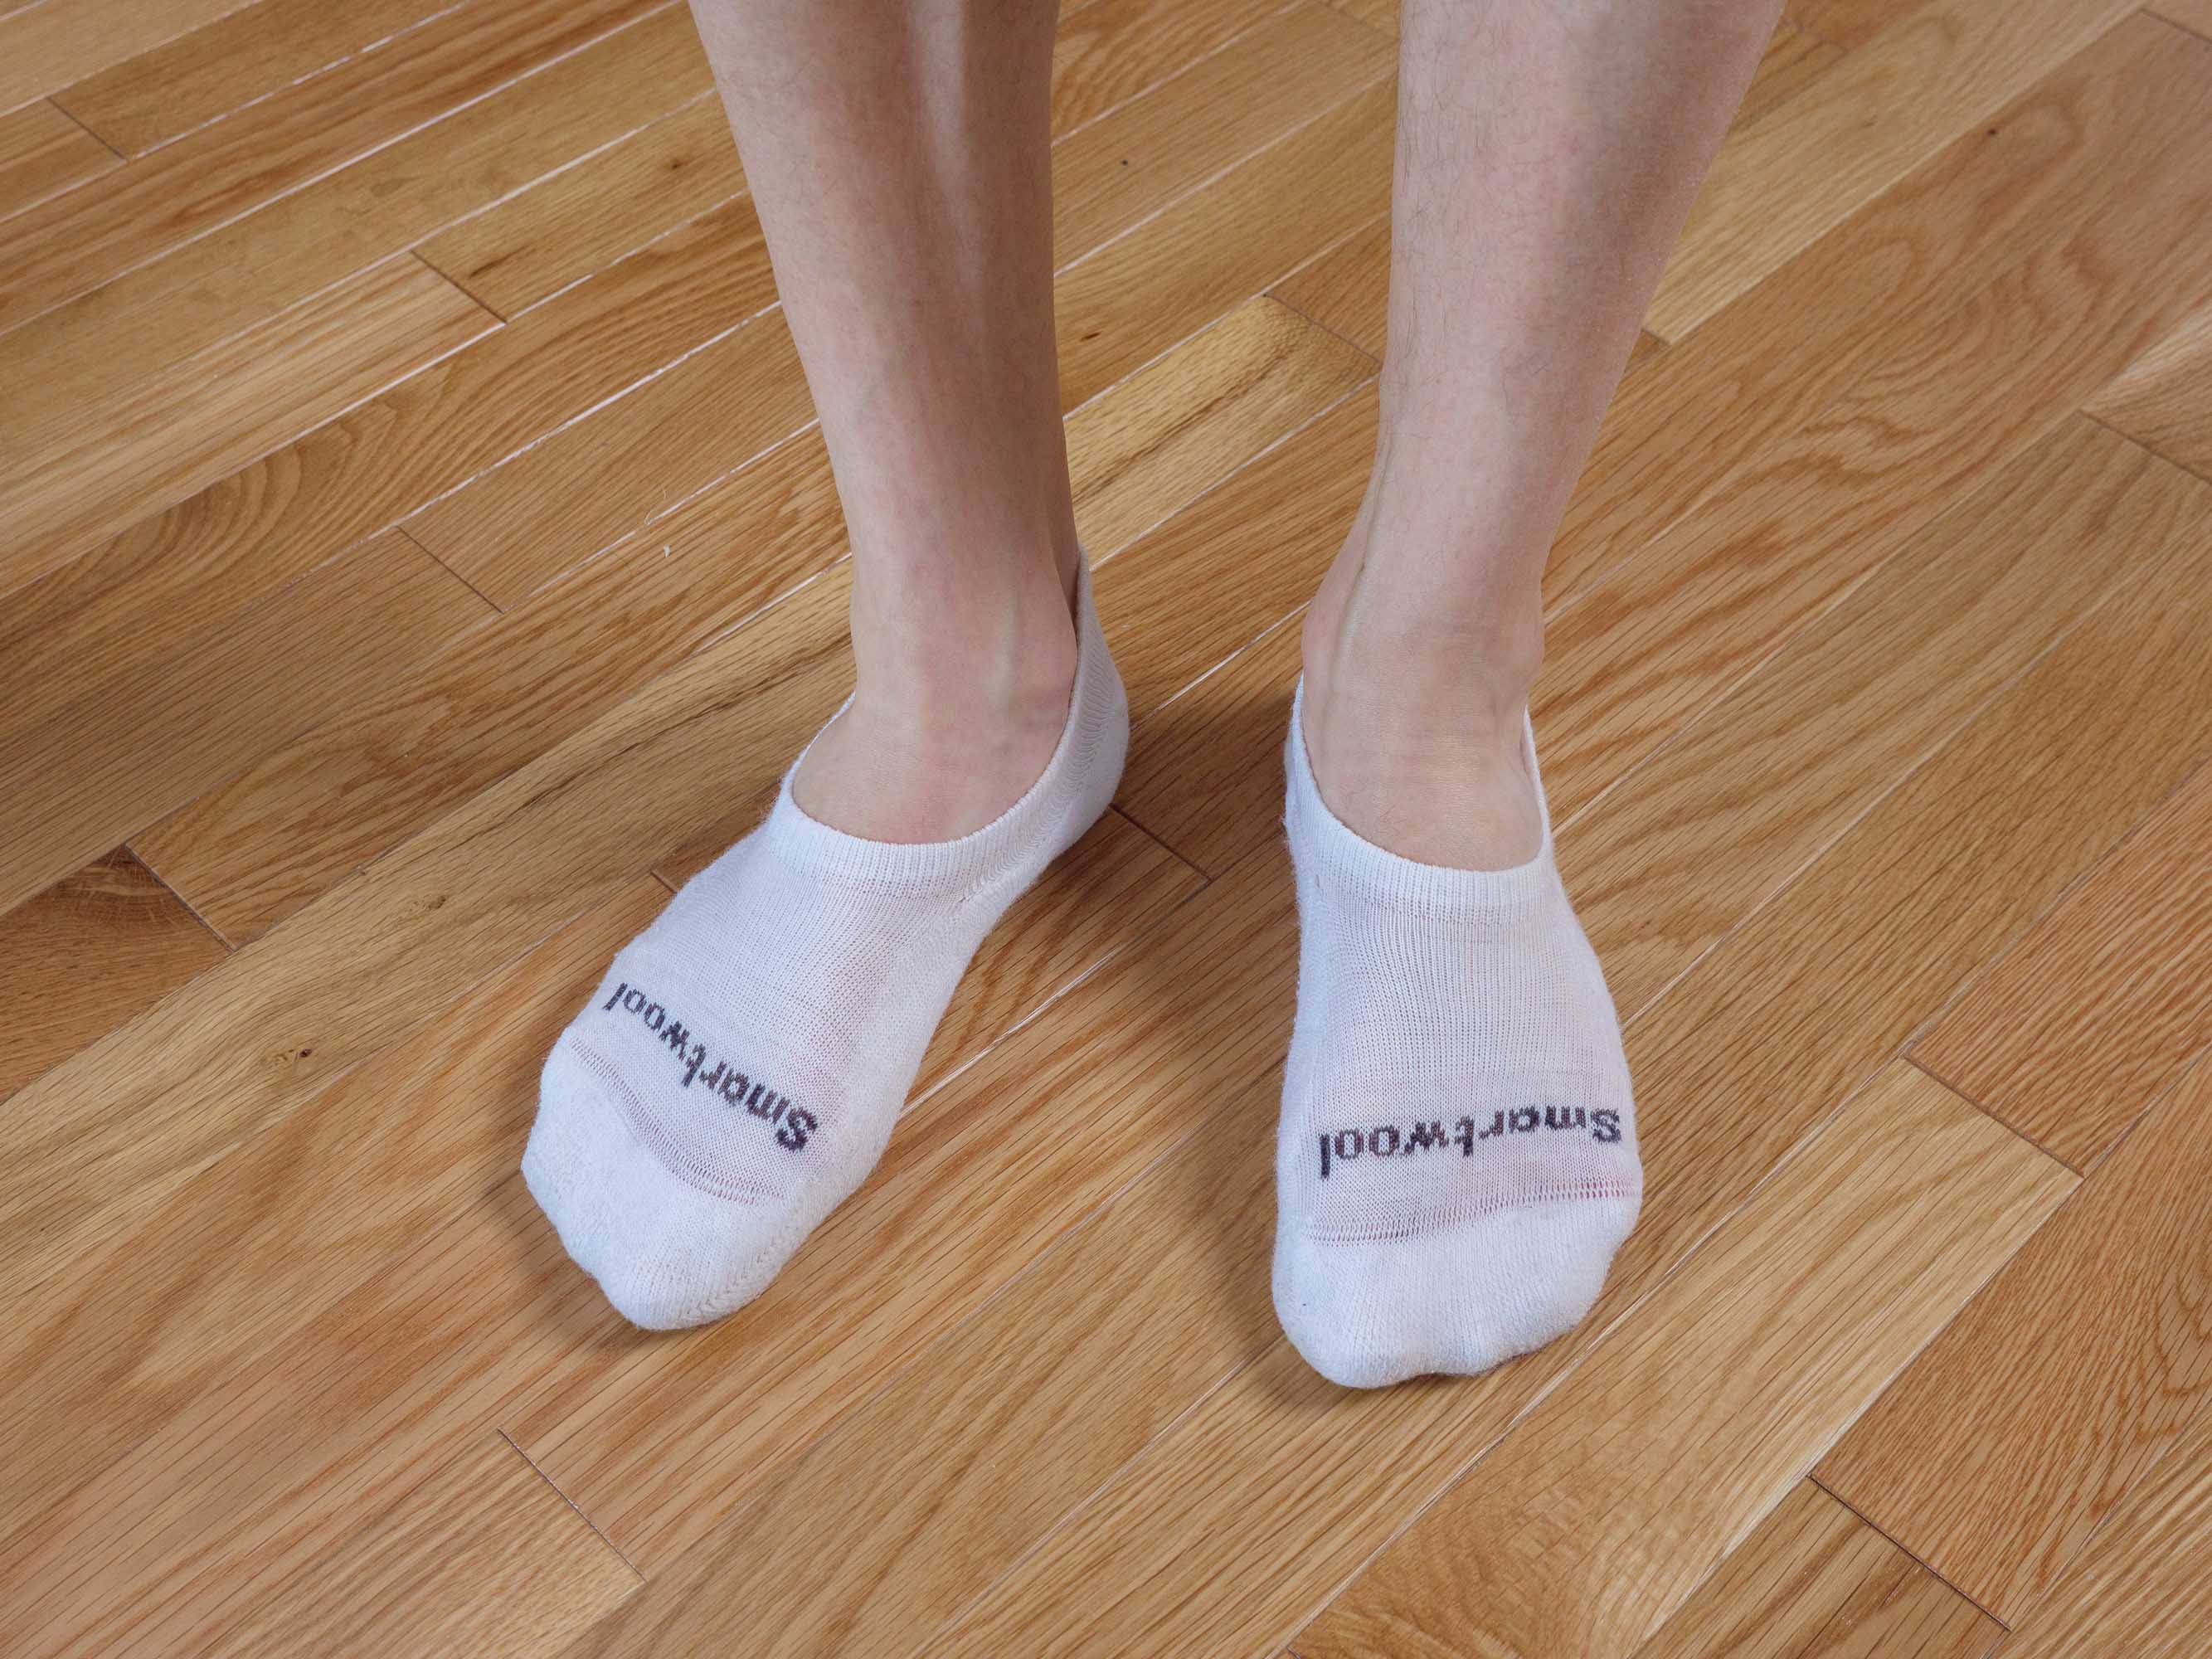 LOFIR Mens No Show Toe Socks Cotton Five Finger Running Socks Invisible Low Cut Liner Ankle Socks Non-Slip Sneaker Socks Casual Sports School Socks size 6-10 4/5 pairs